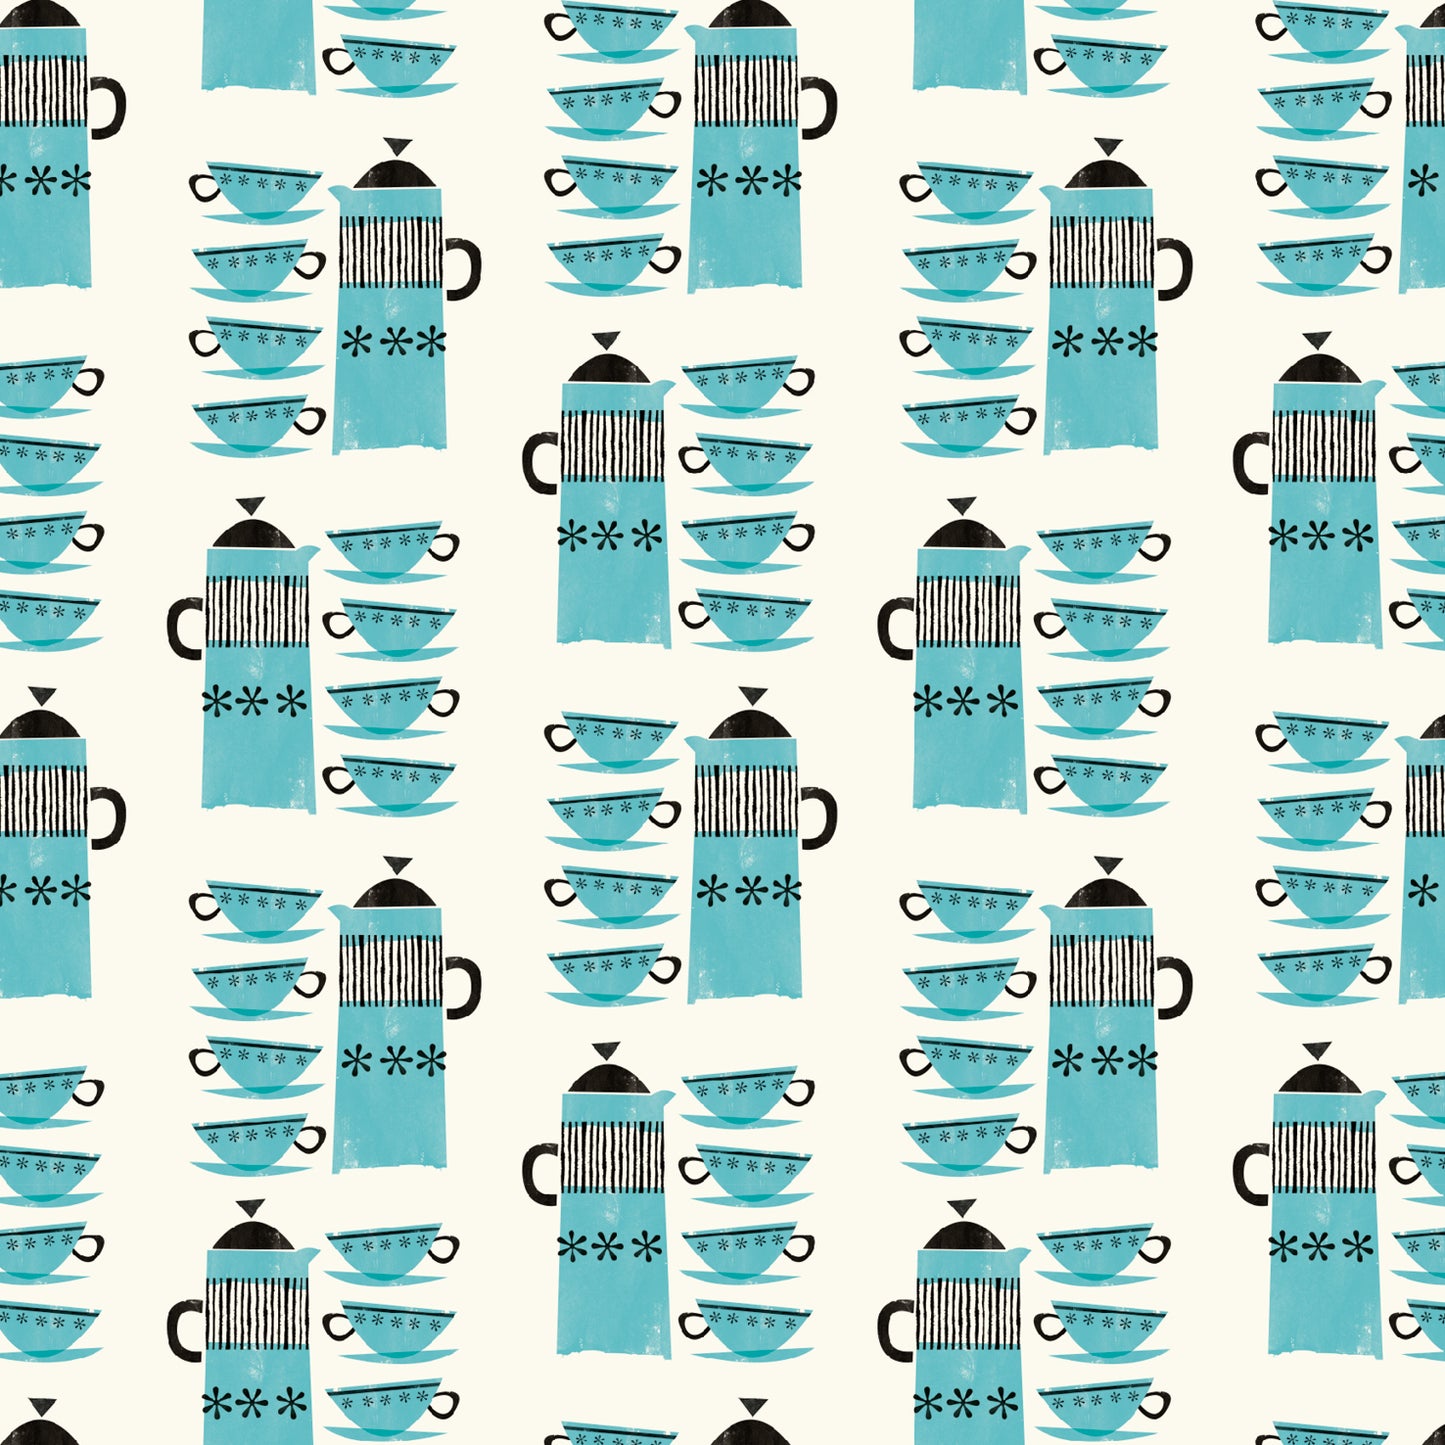 Just Patterns: Blue Coffee Pots